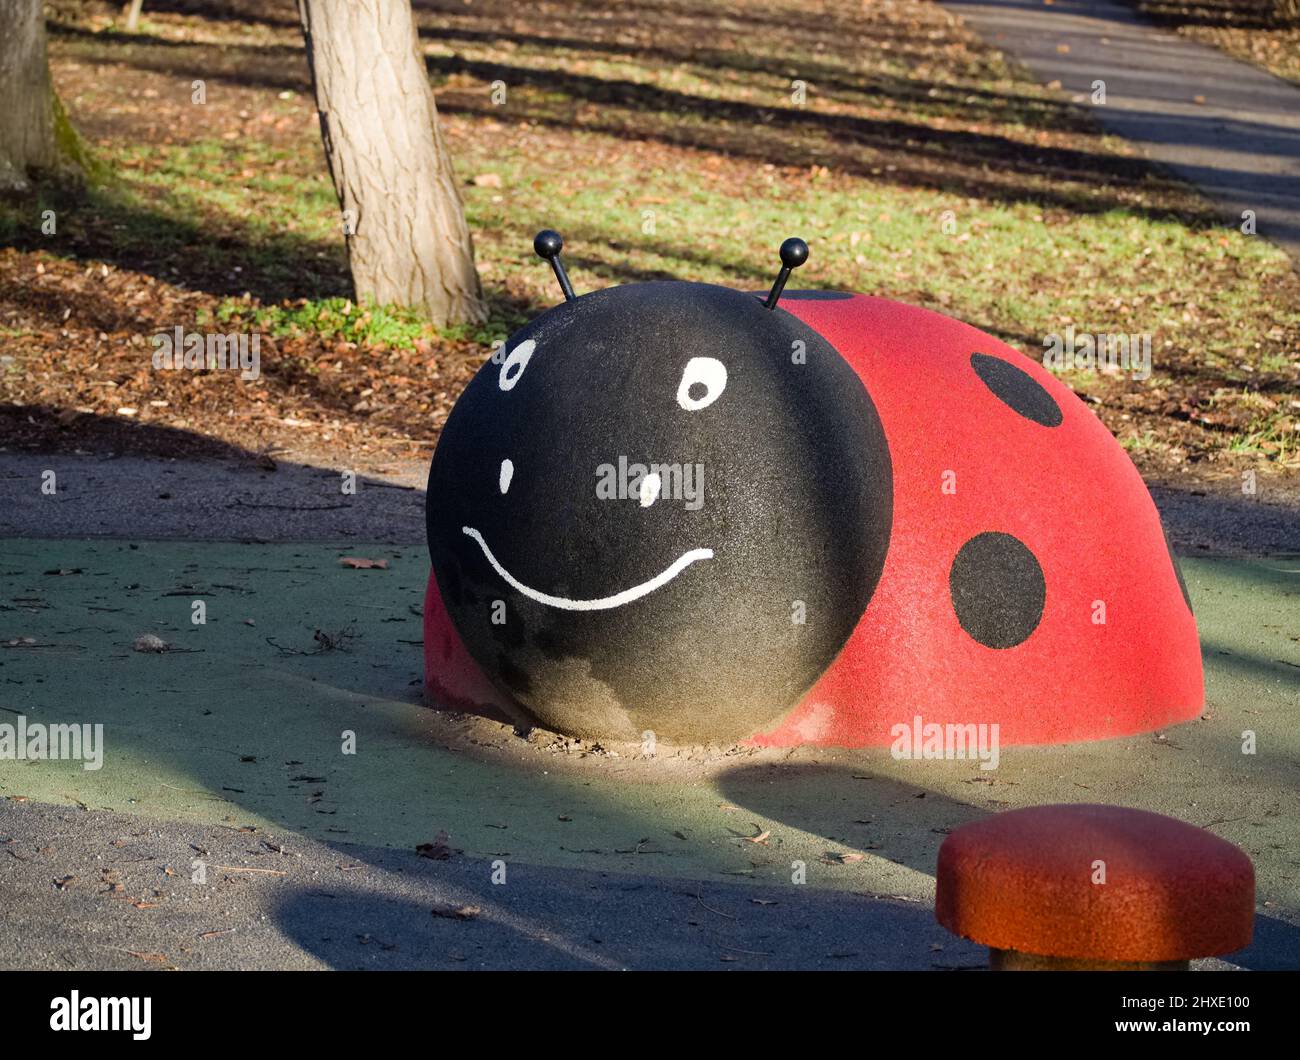 Ladybug Rider Playground Toy in the Park Stock Photo